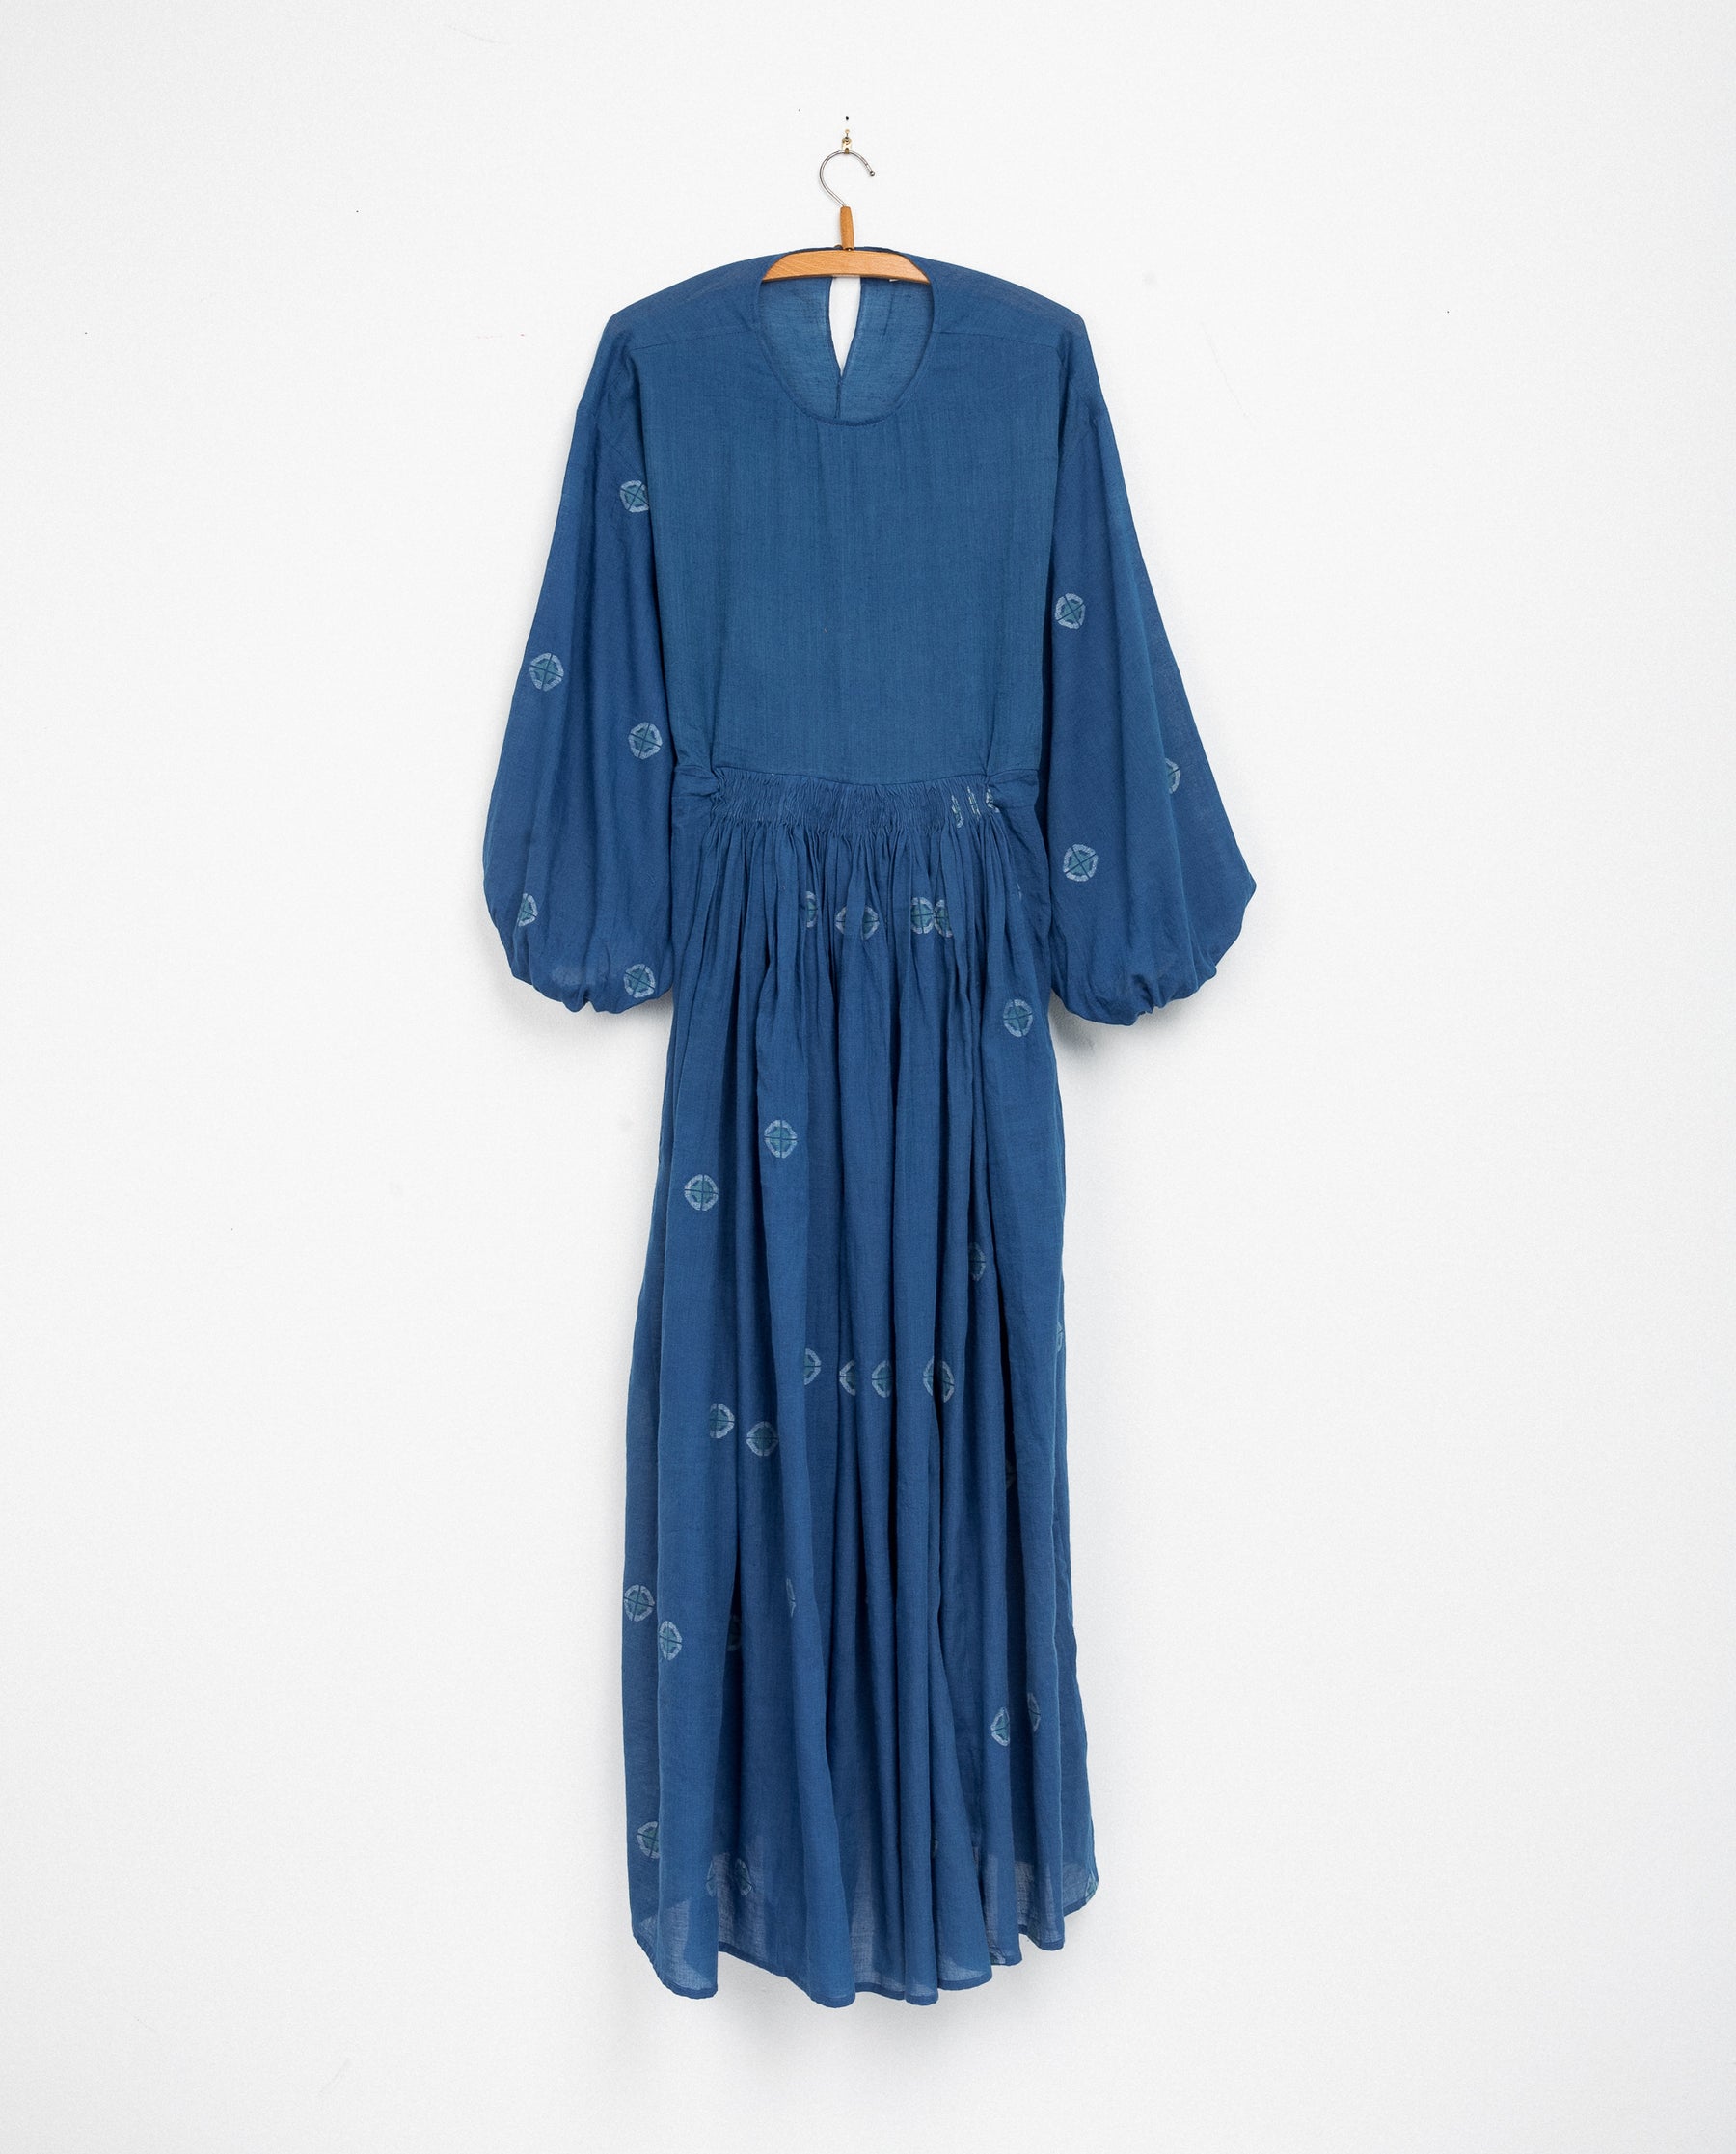 Handwoven & Naturally Dyed Women's Dresses - Umber & Ochre